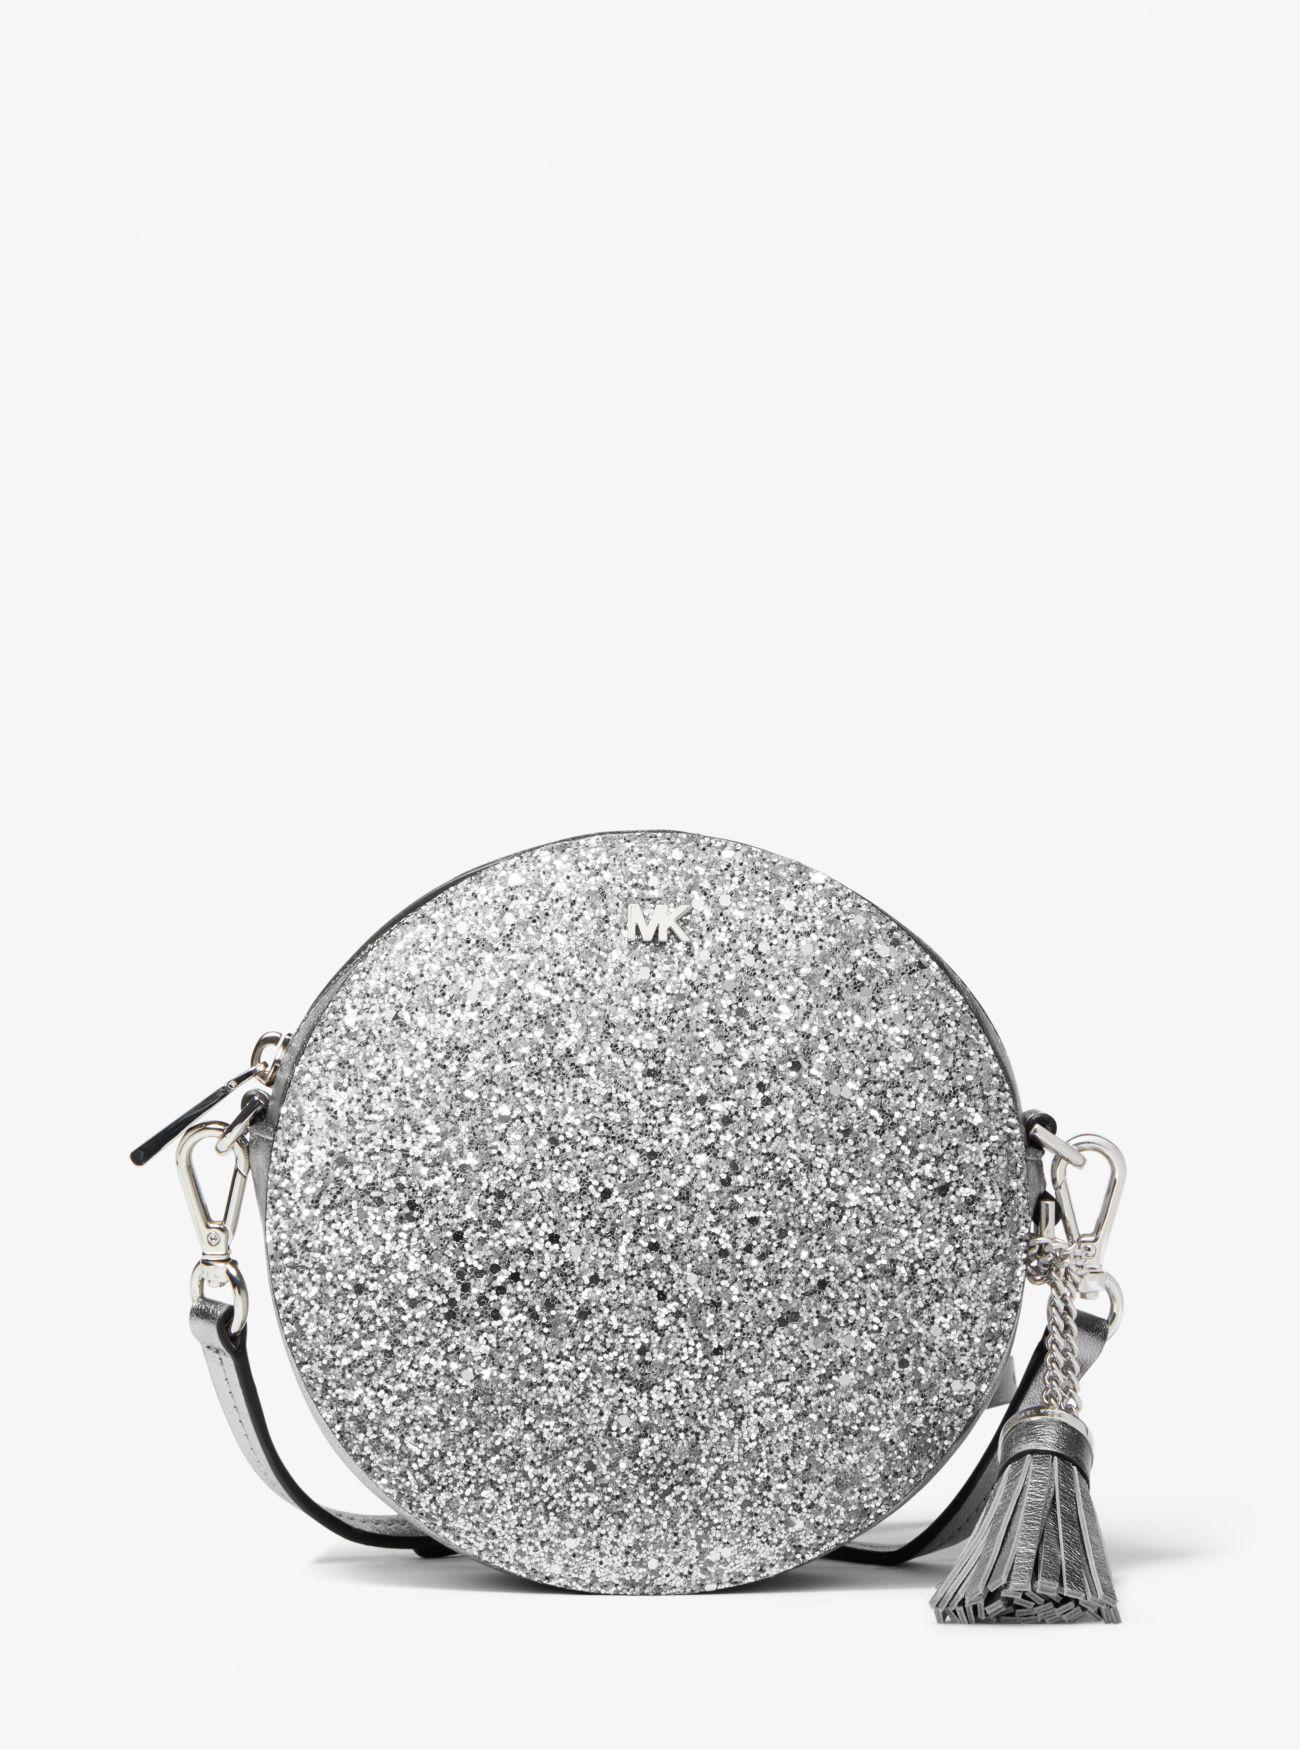 Michael Kors Glitter Canteen Crossbody in Silver (Metallic) - Lyst